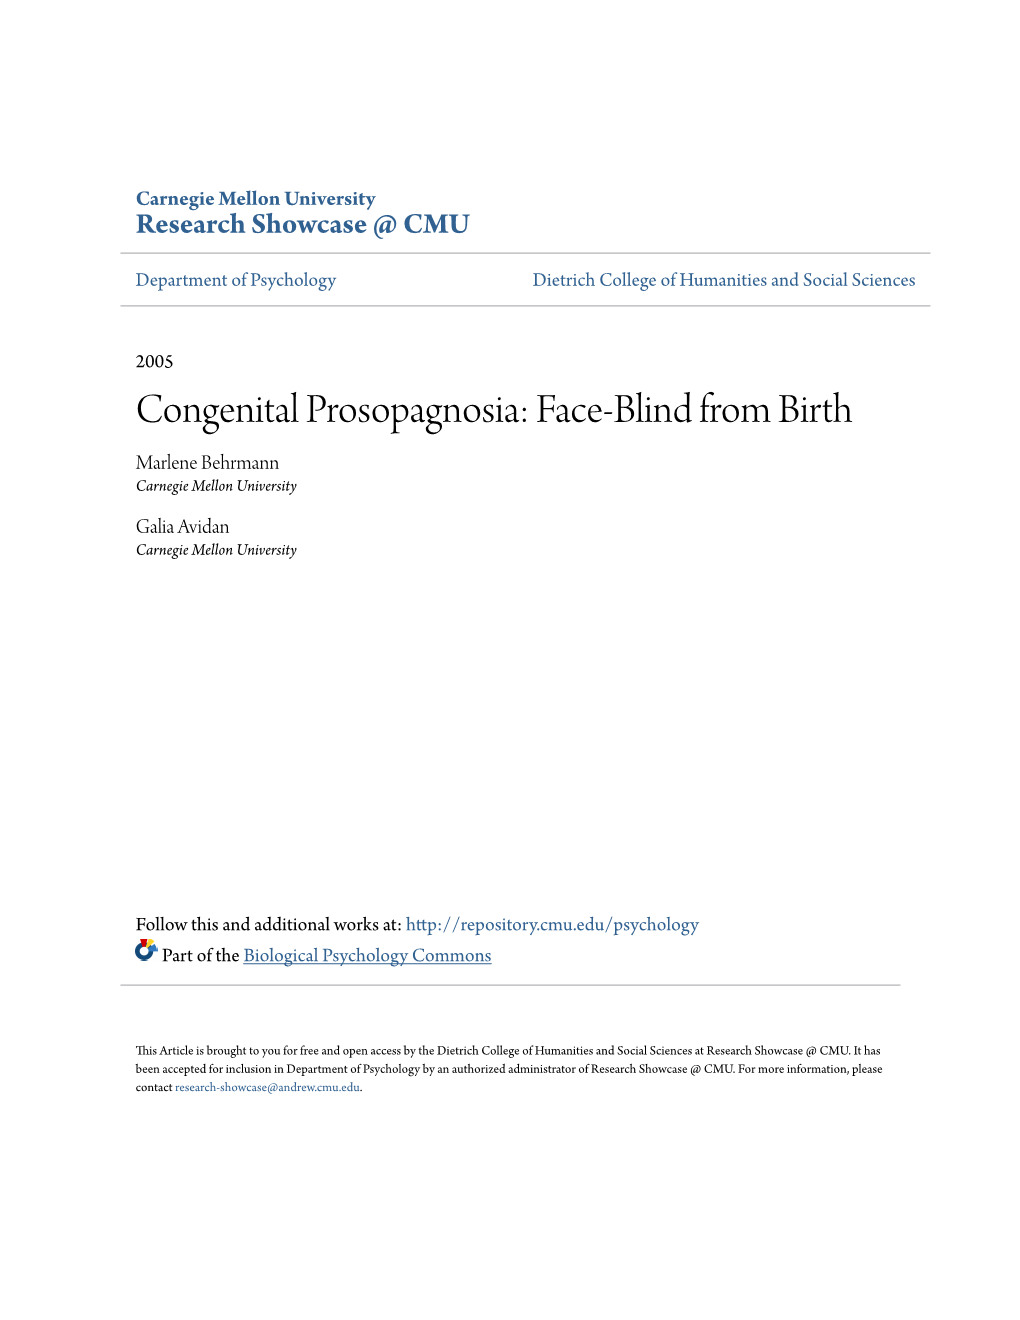 Congenital Prosopagnosia: Face-Blind from Birth Marlene Behrmann Carnegie Mellon University